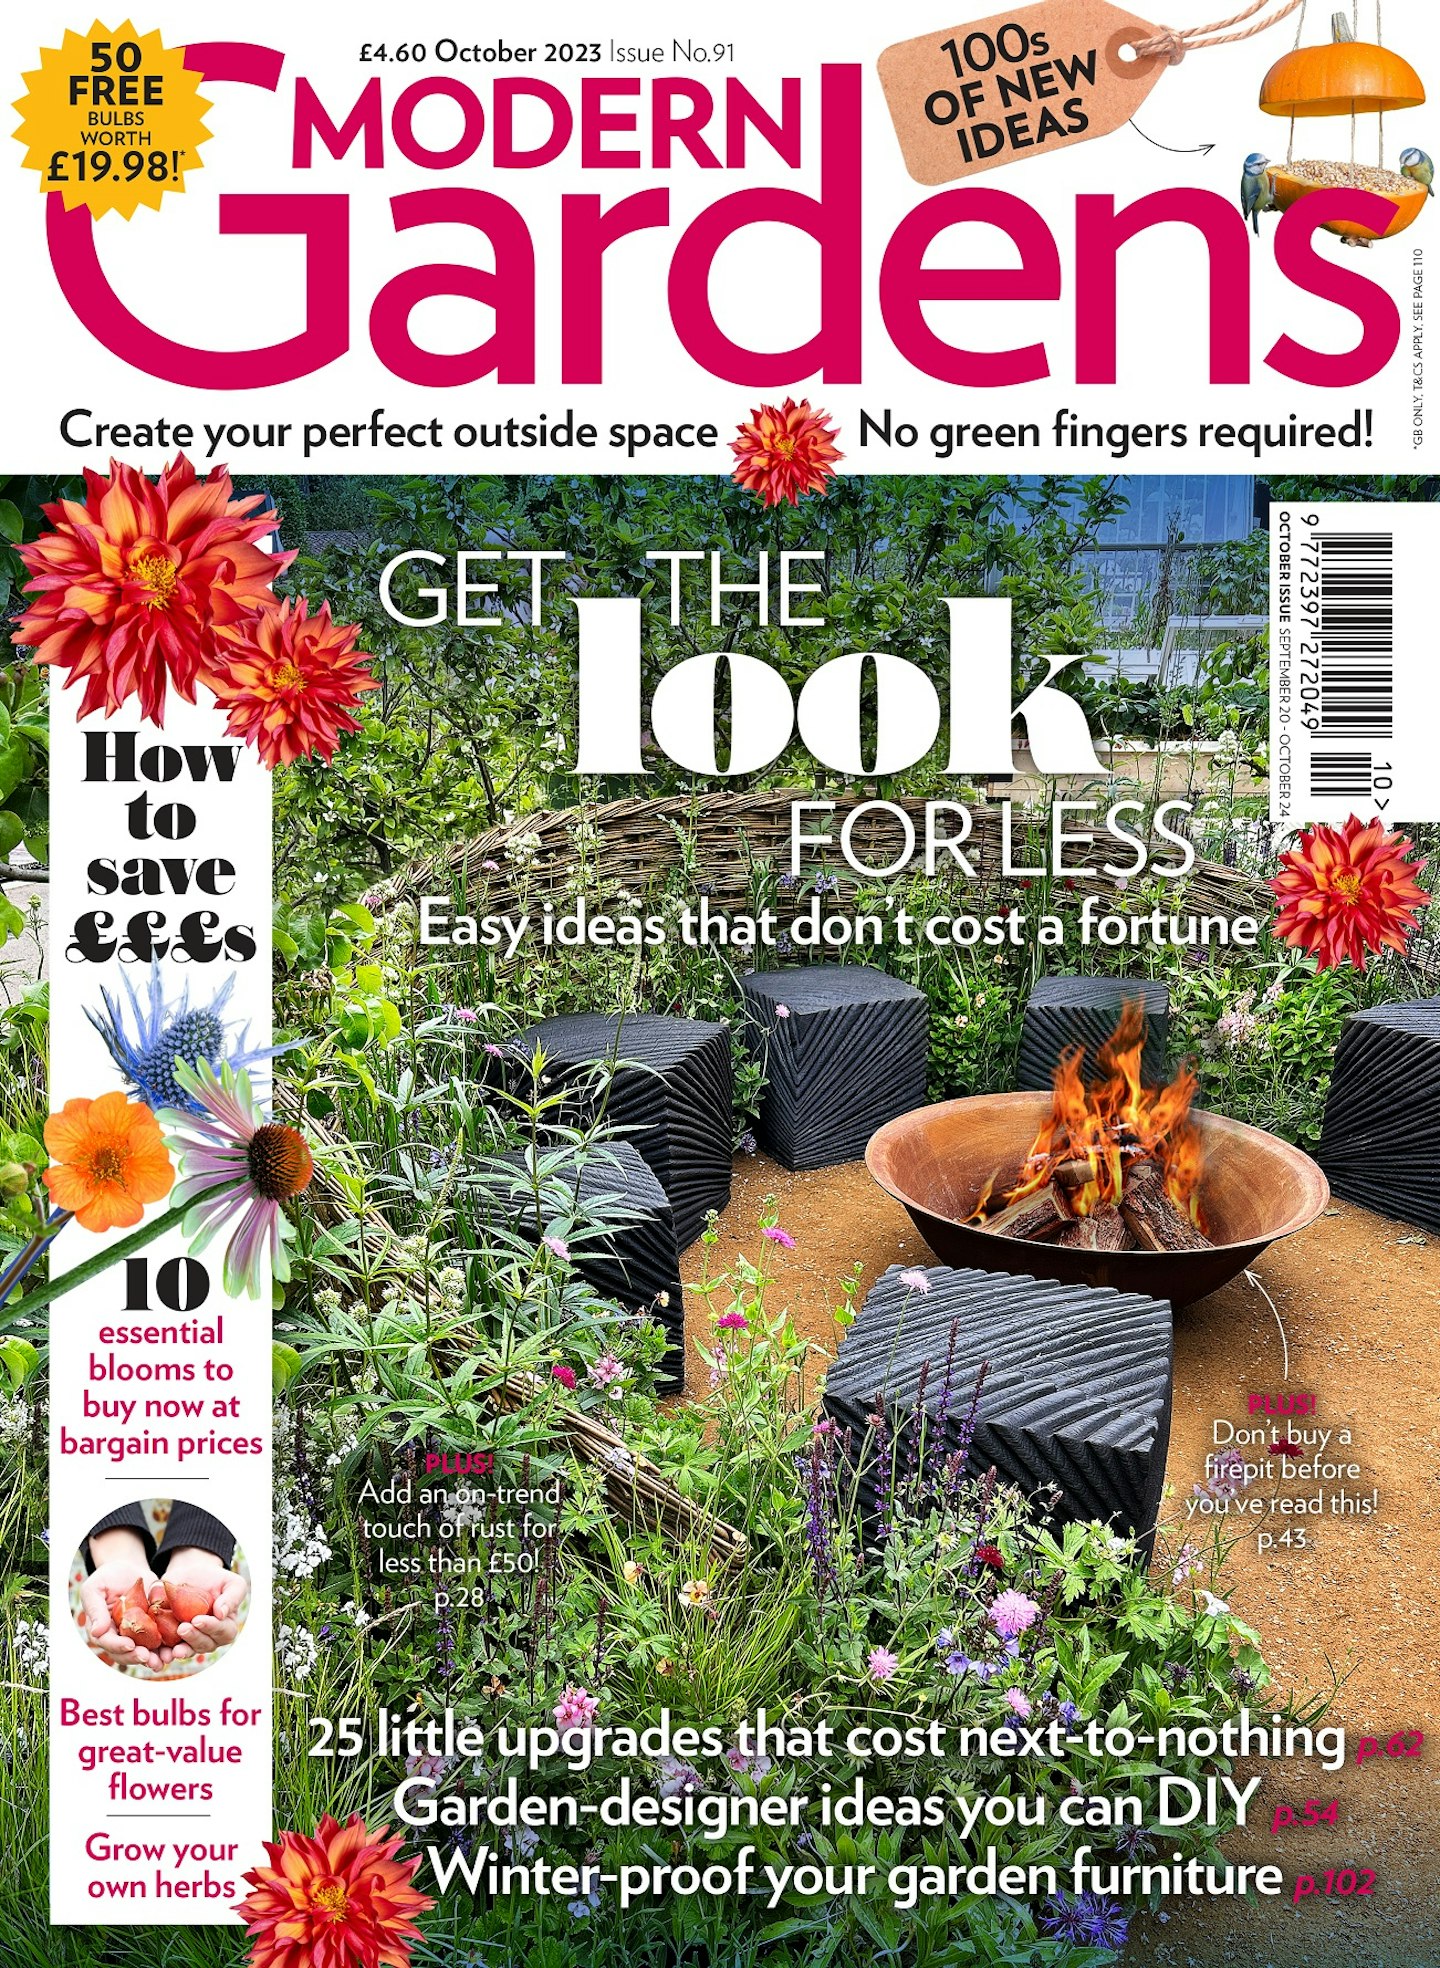 Modern-Gardens-covers